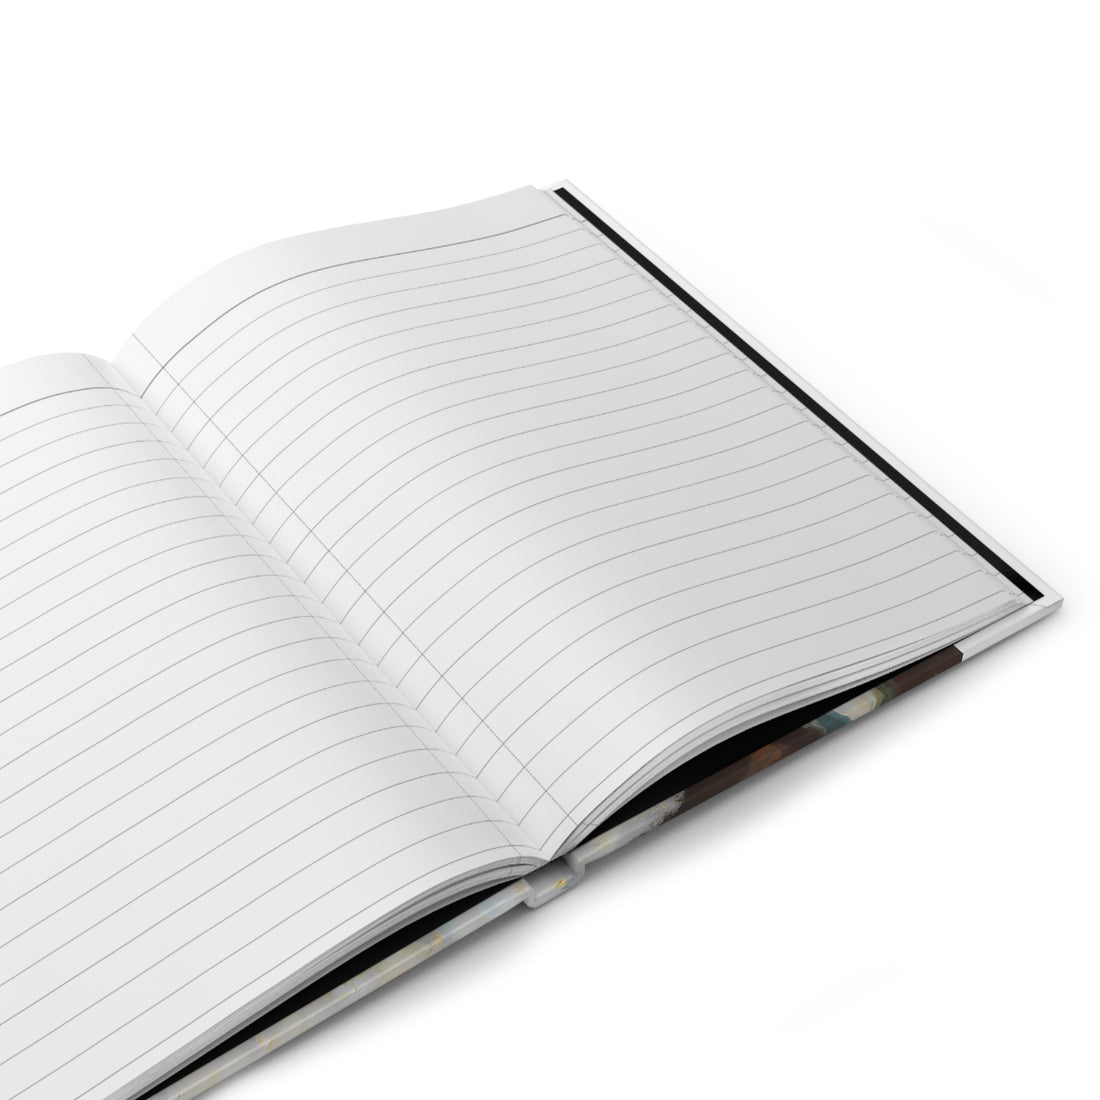 Happiness Notebook, Matte Hardcover Journal